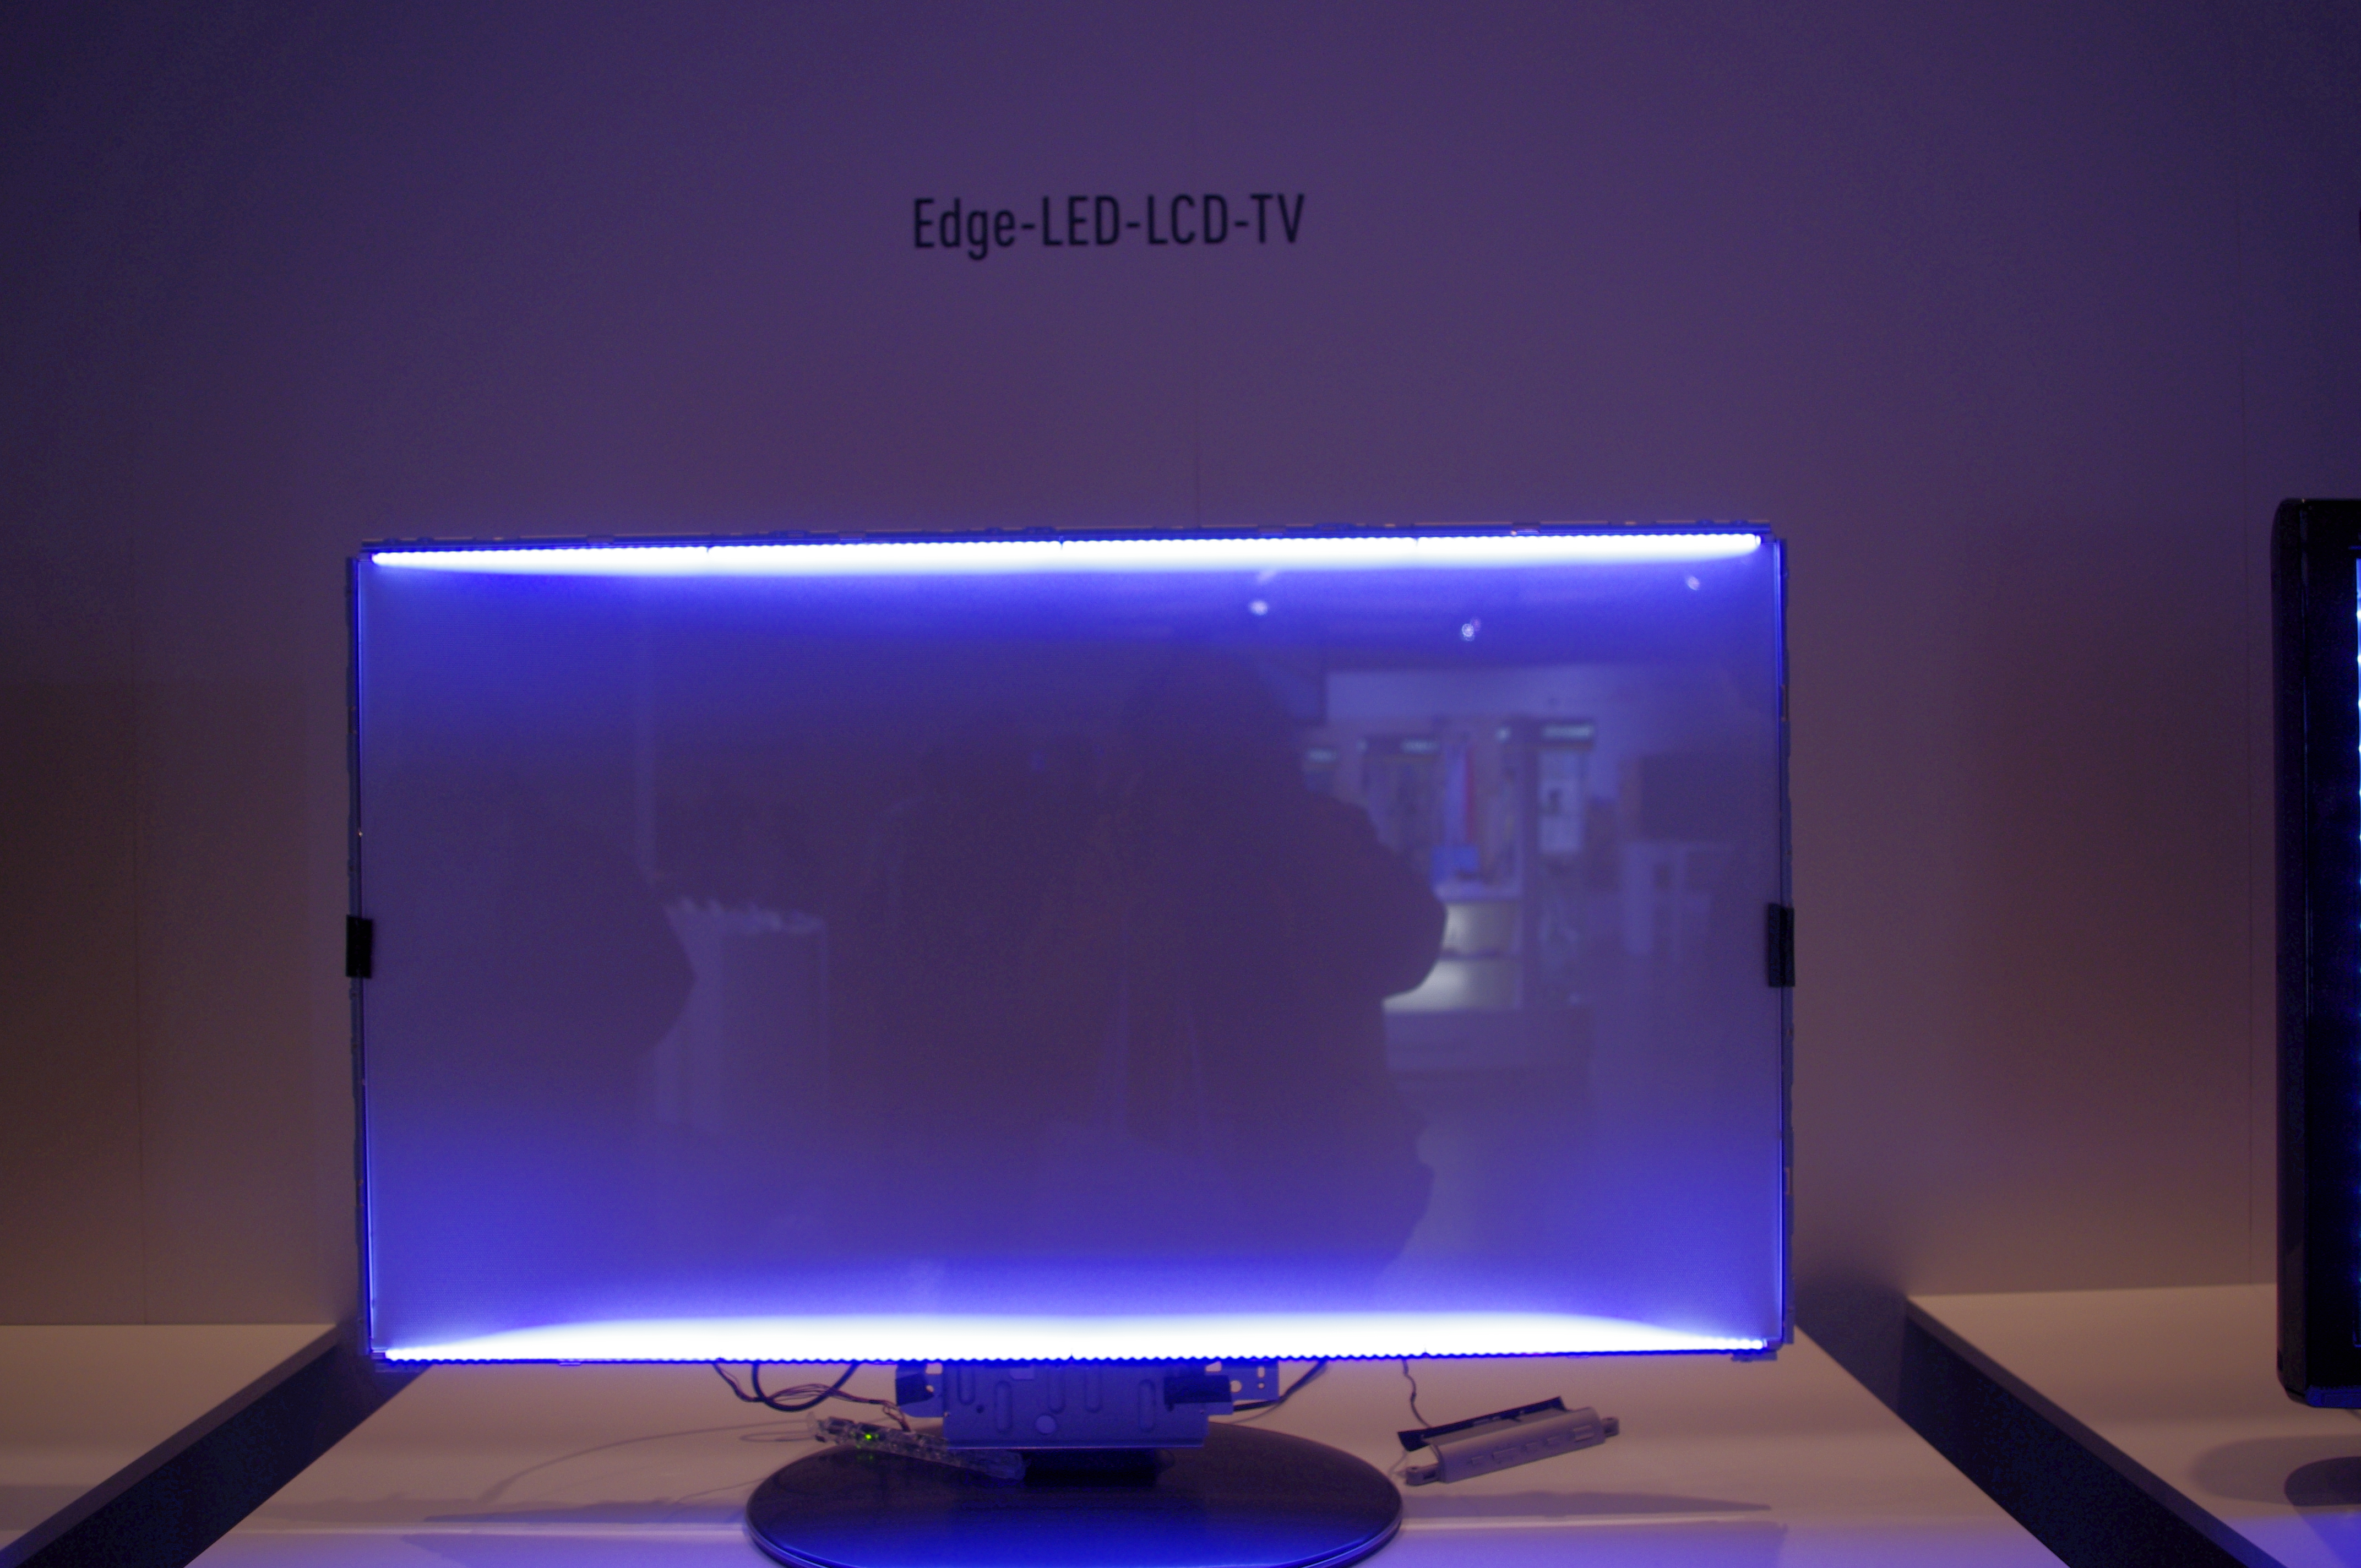 Телевизор direct подсветка. Edge led подсветка Samsung. Подсветка Edge led что это такое в телевизоре. Тип светодиодной подсветки: Edge led. Подсветка direct led что это такое в телевизоре.